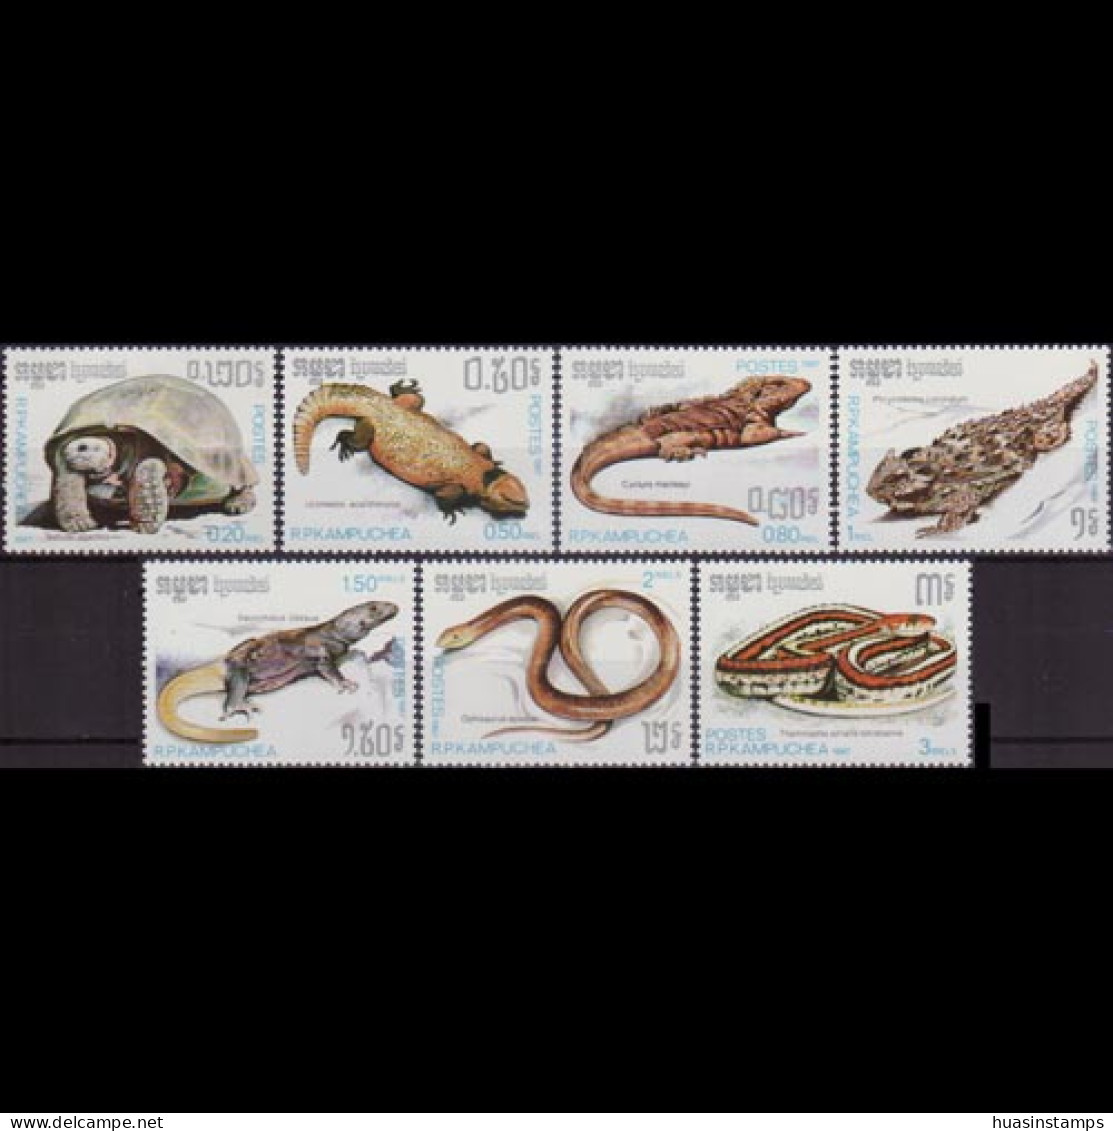 CAMBODIA 1987 - Scott# 805-11 Reptiles Set Of 7 MNH - Cambodge